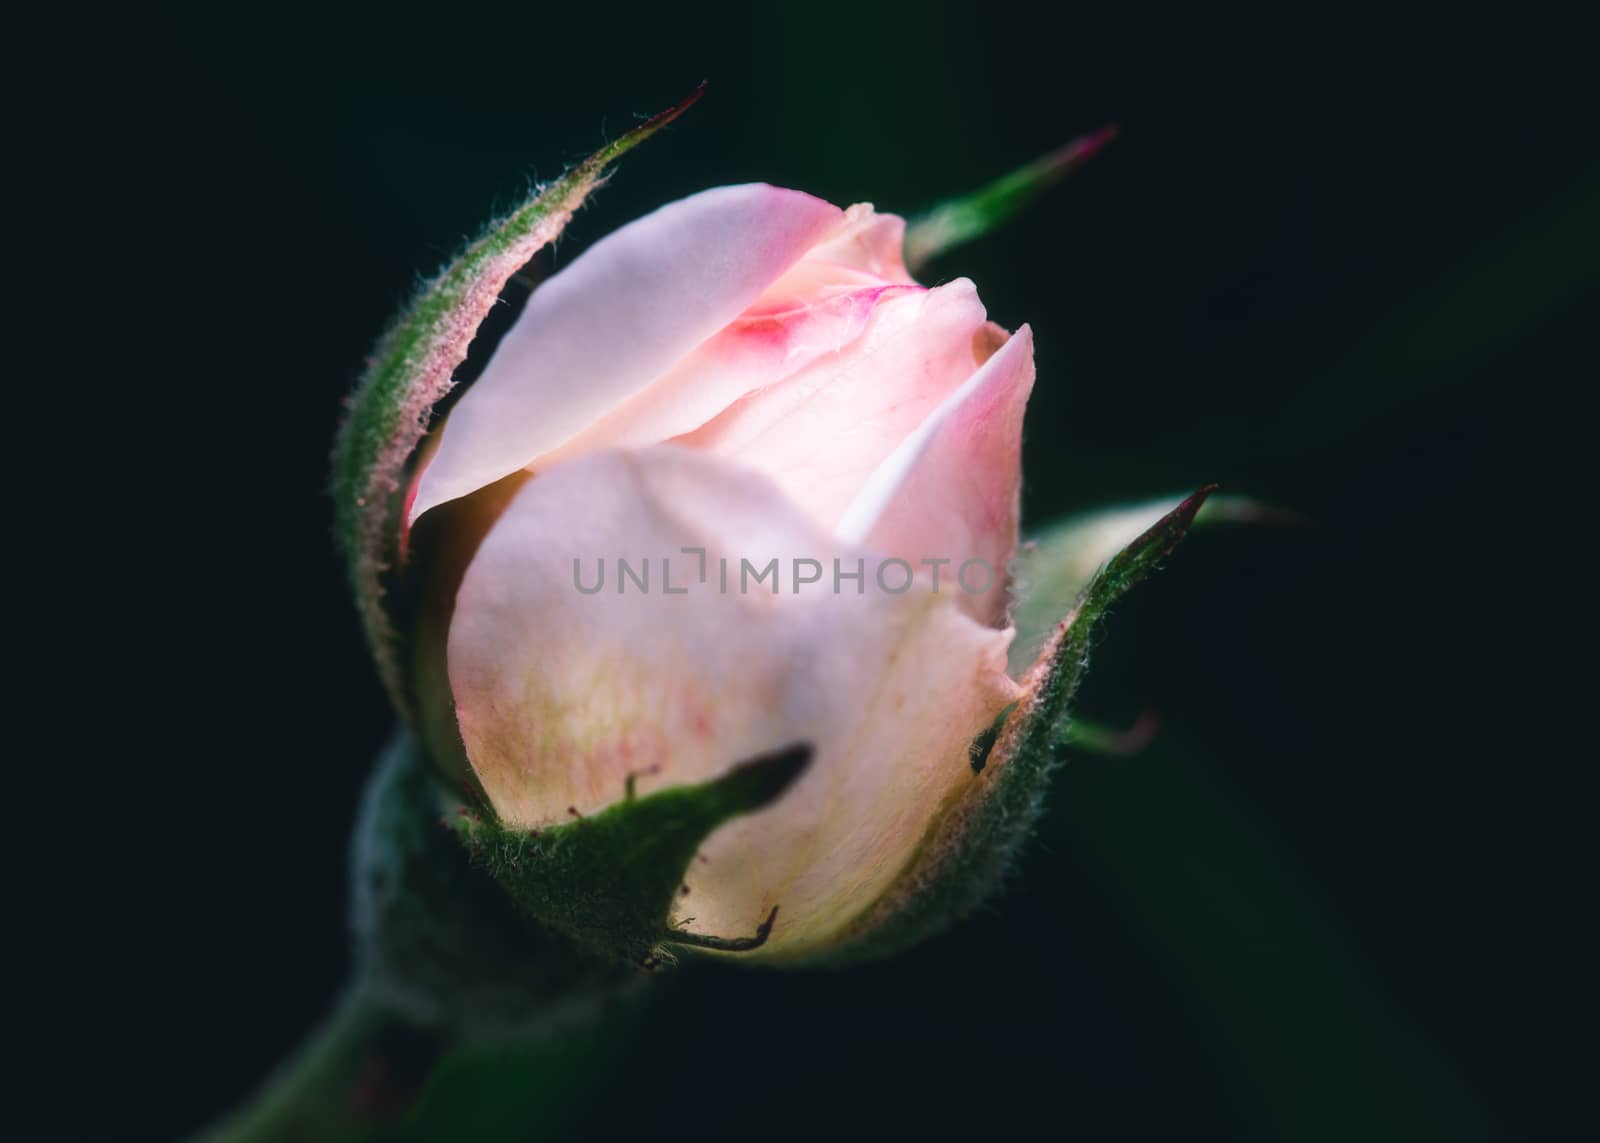 Macro shot of a rose bud by dutourdumonde